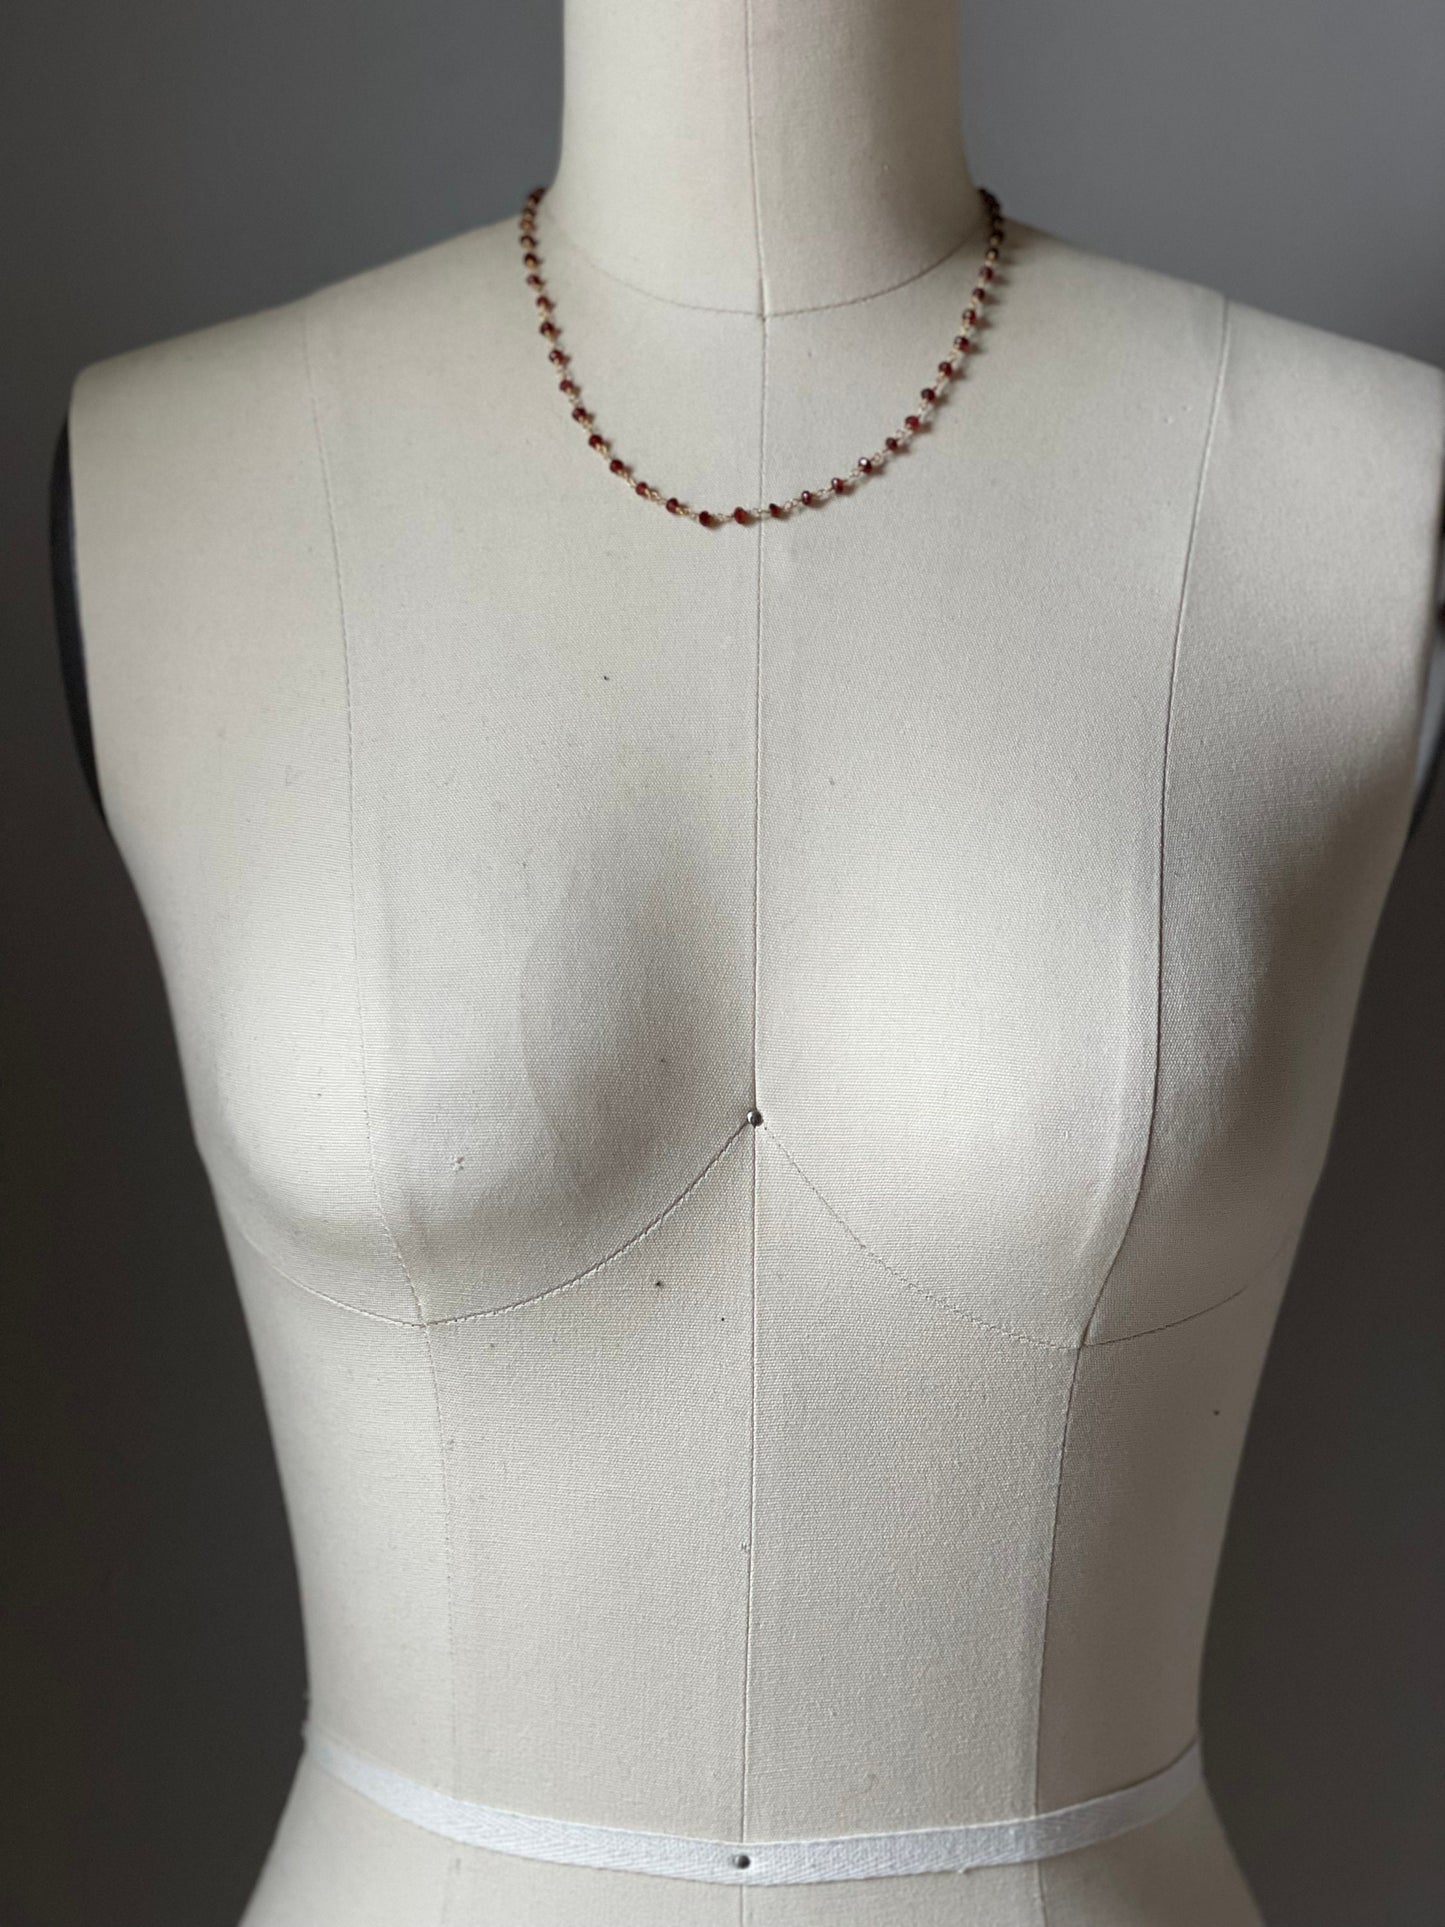 Beaded garnet necklace